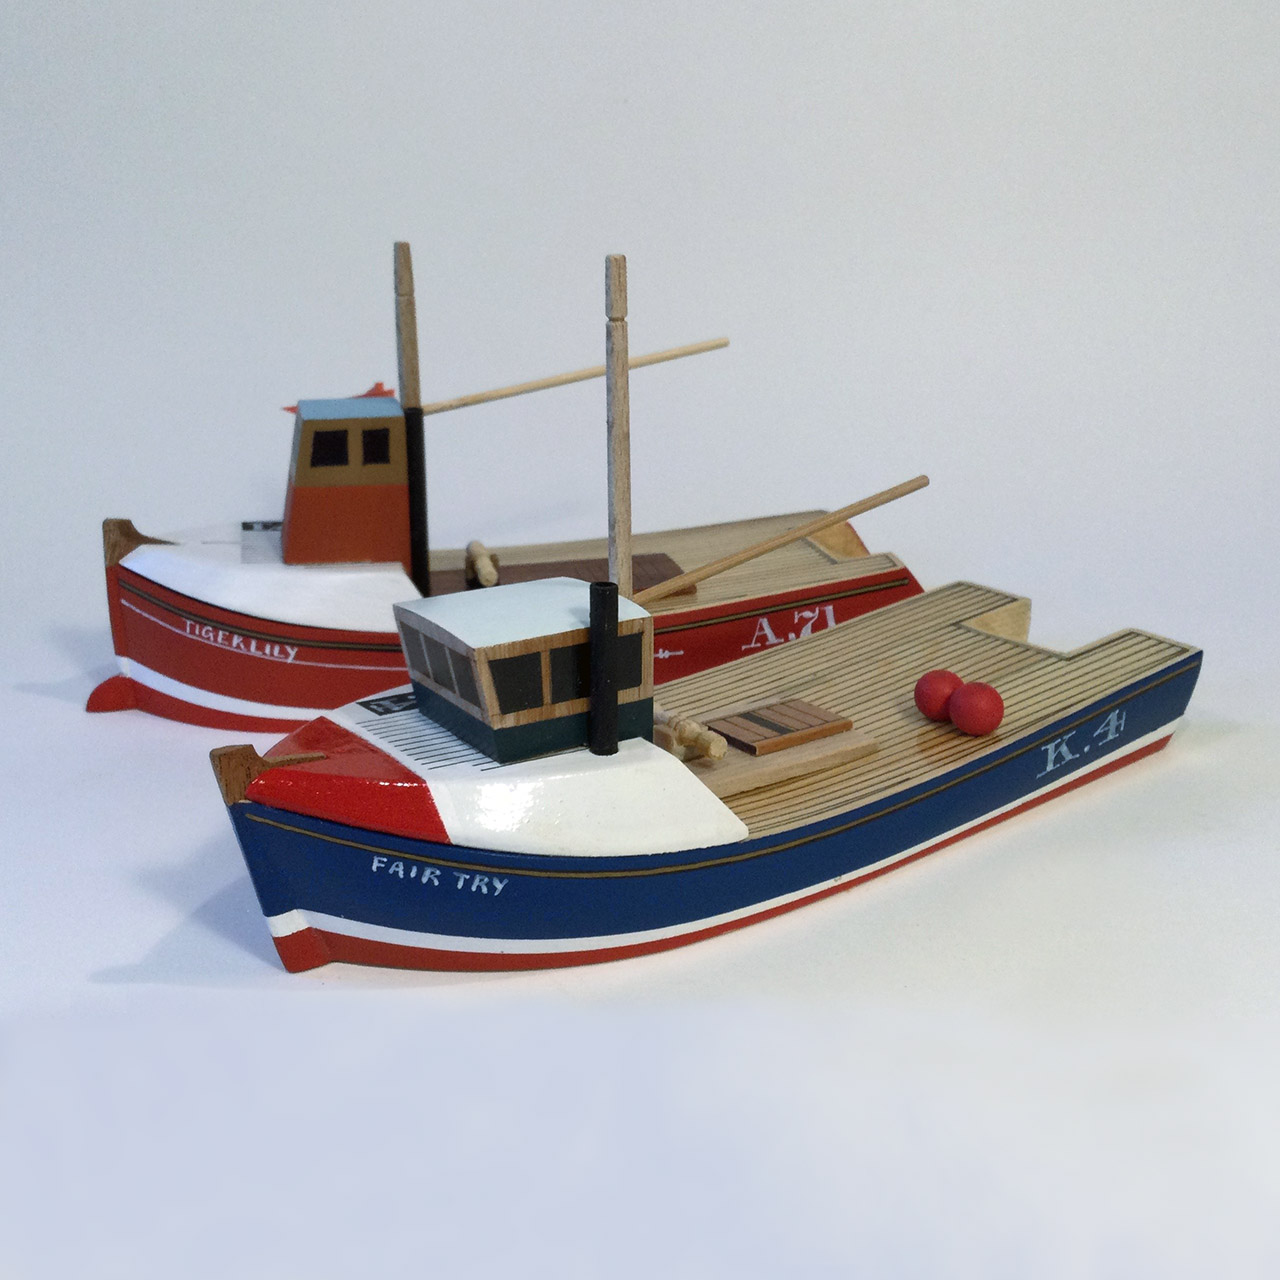 Modern inshore creel boat, circa 1990